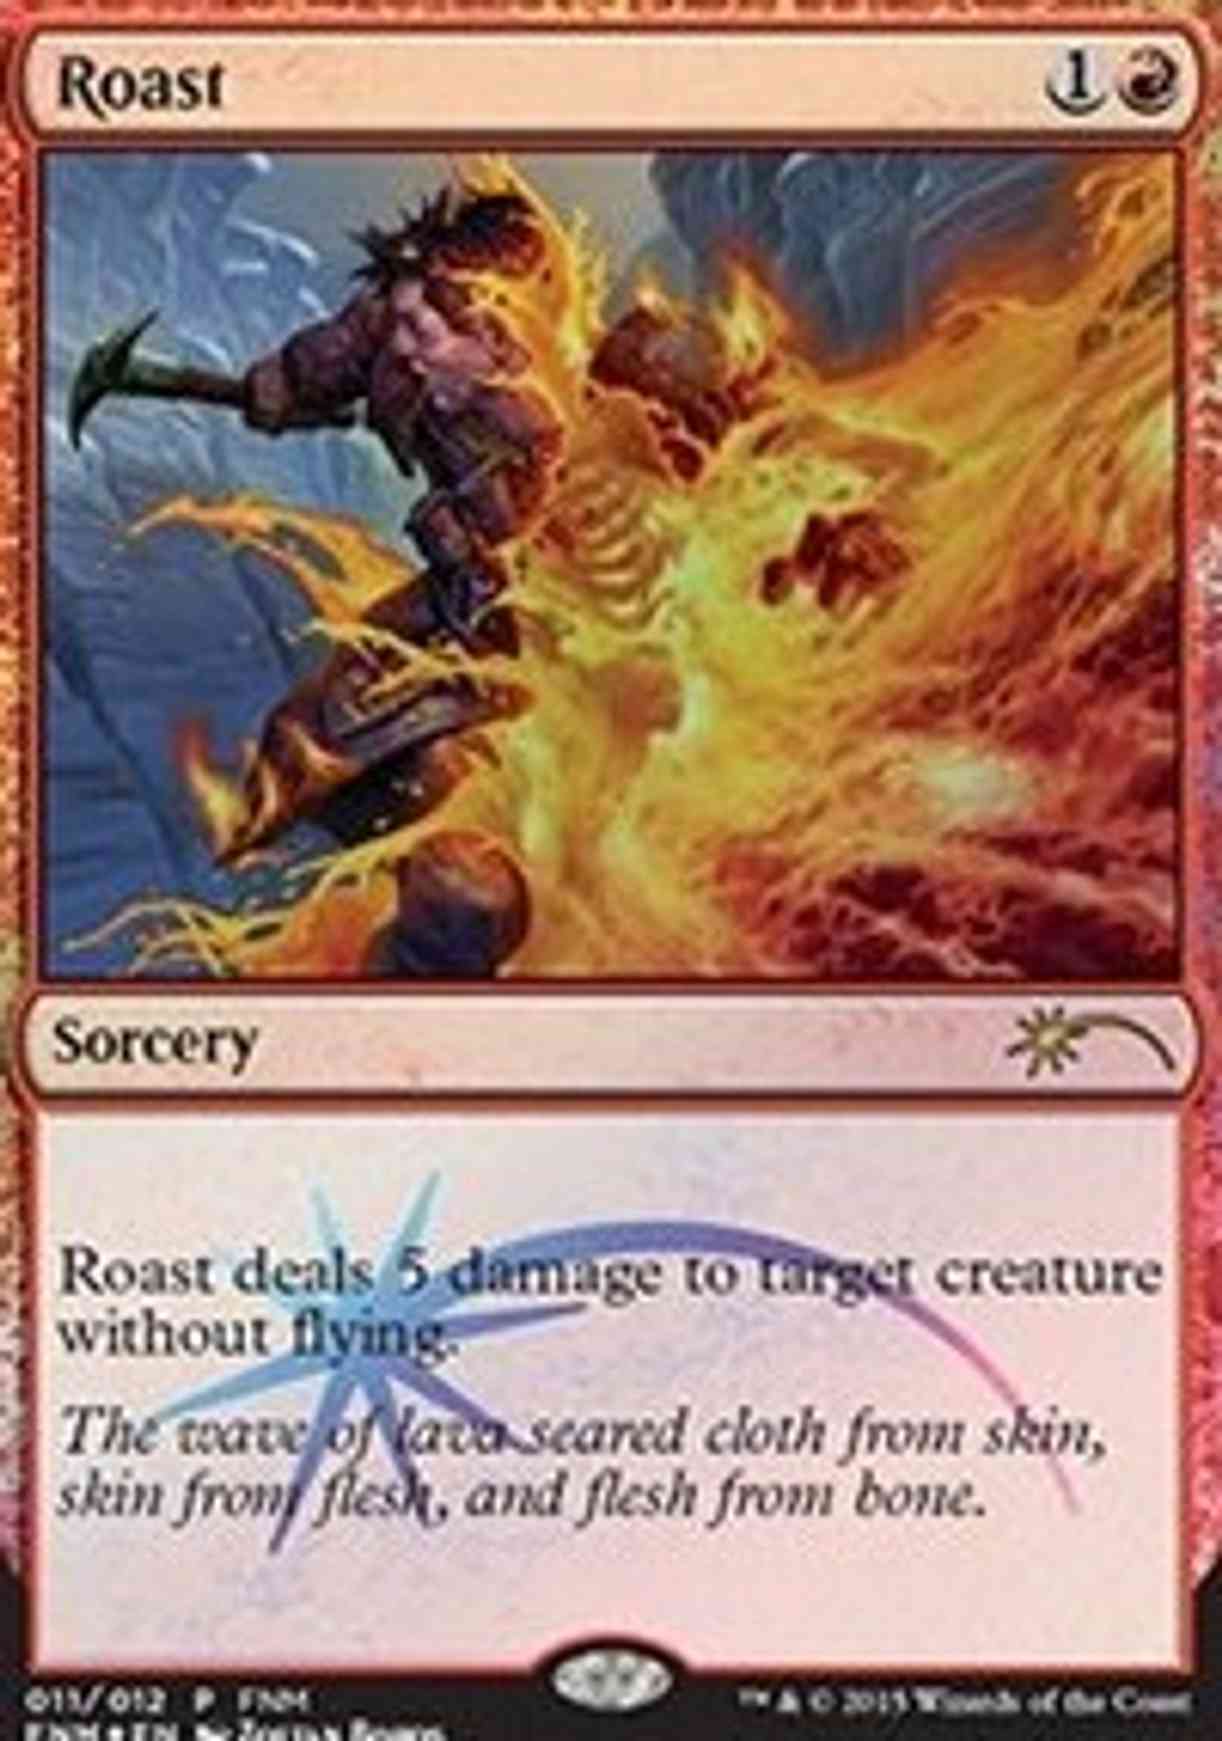 Roast magic card front